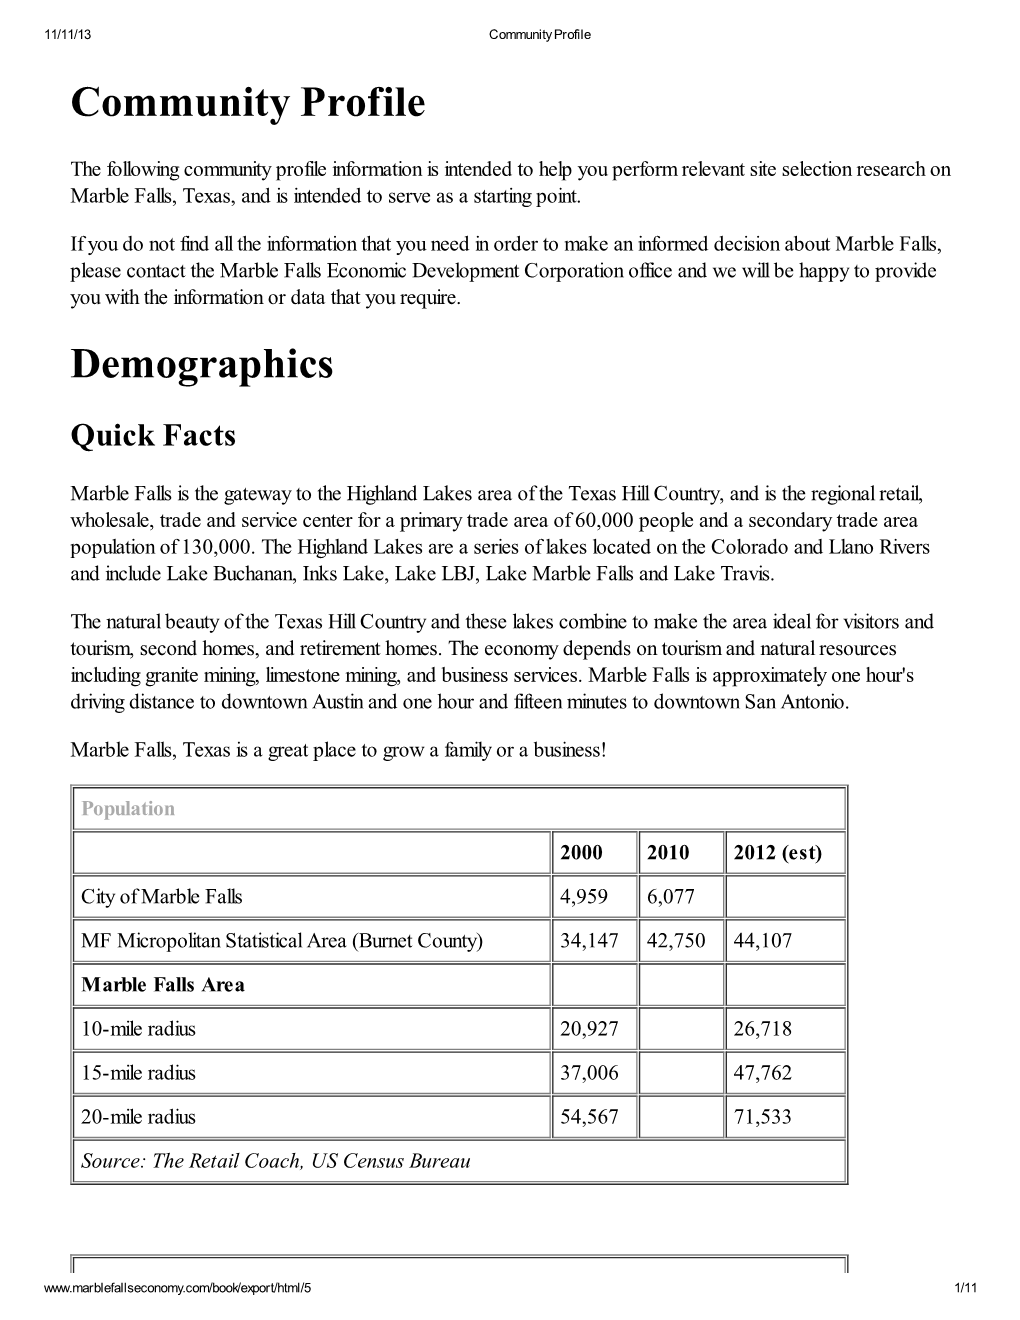 Community Profile Demographics